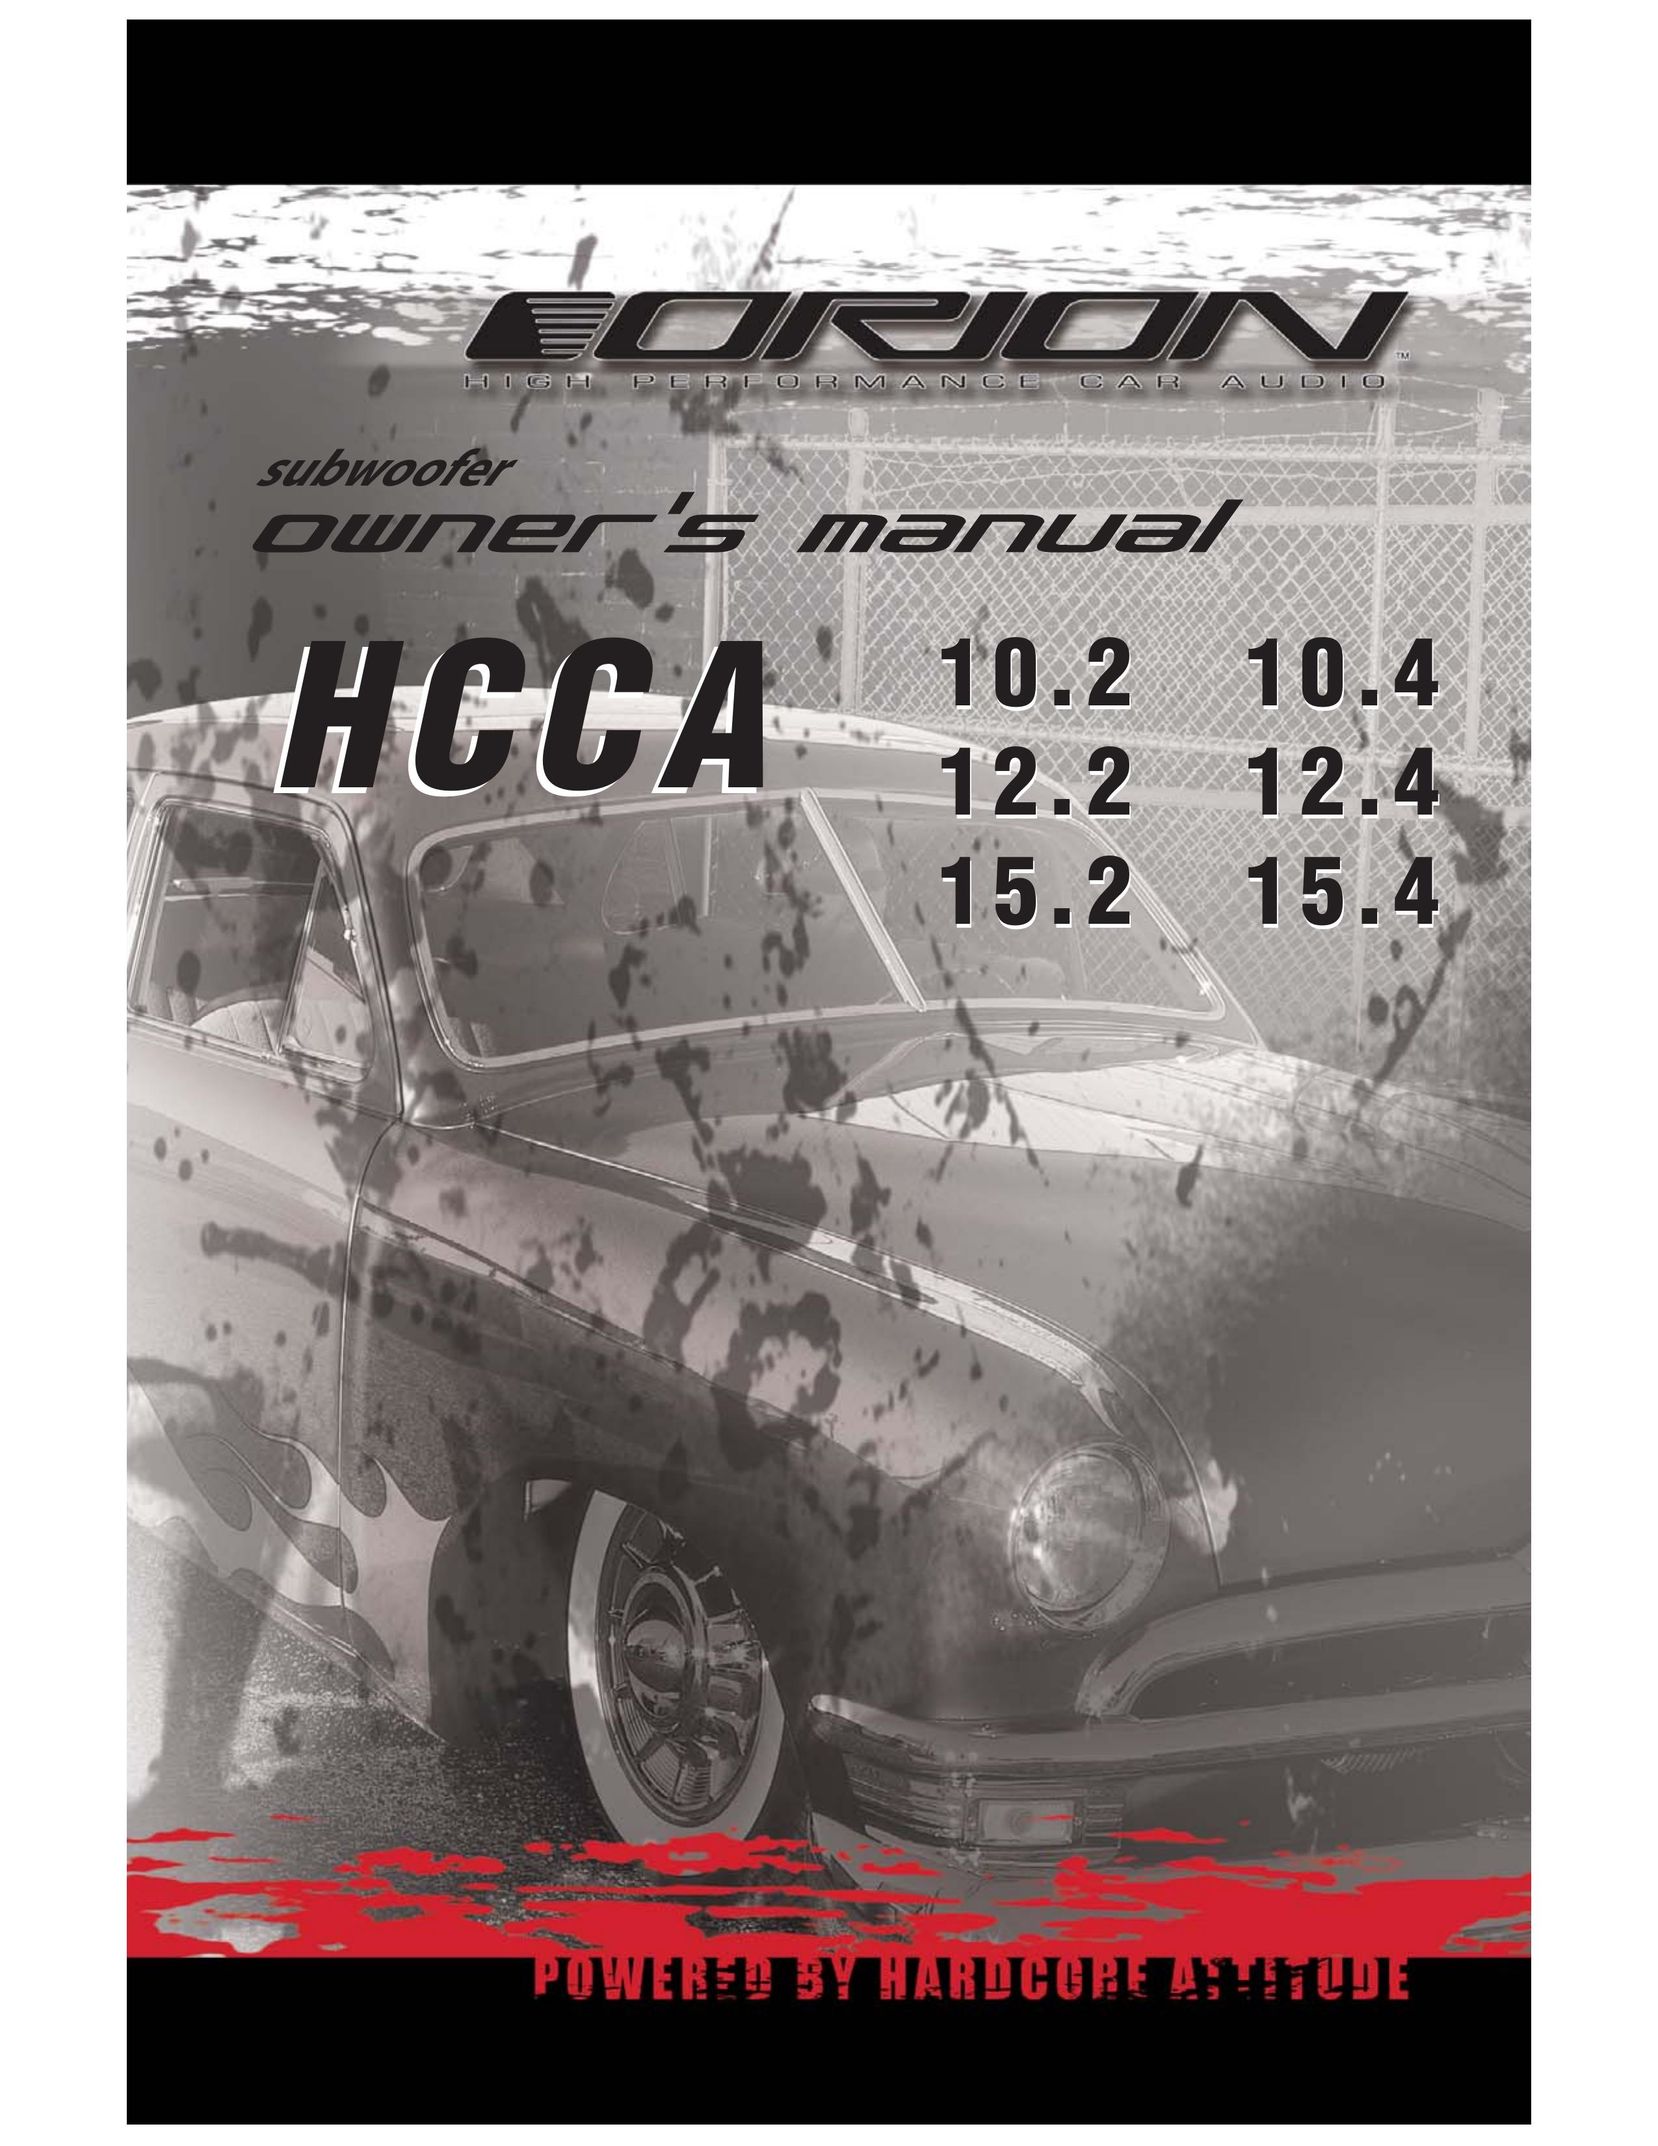 Orion Car Audio HCCA 15.4 Speaker User Manual